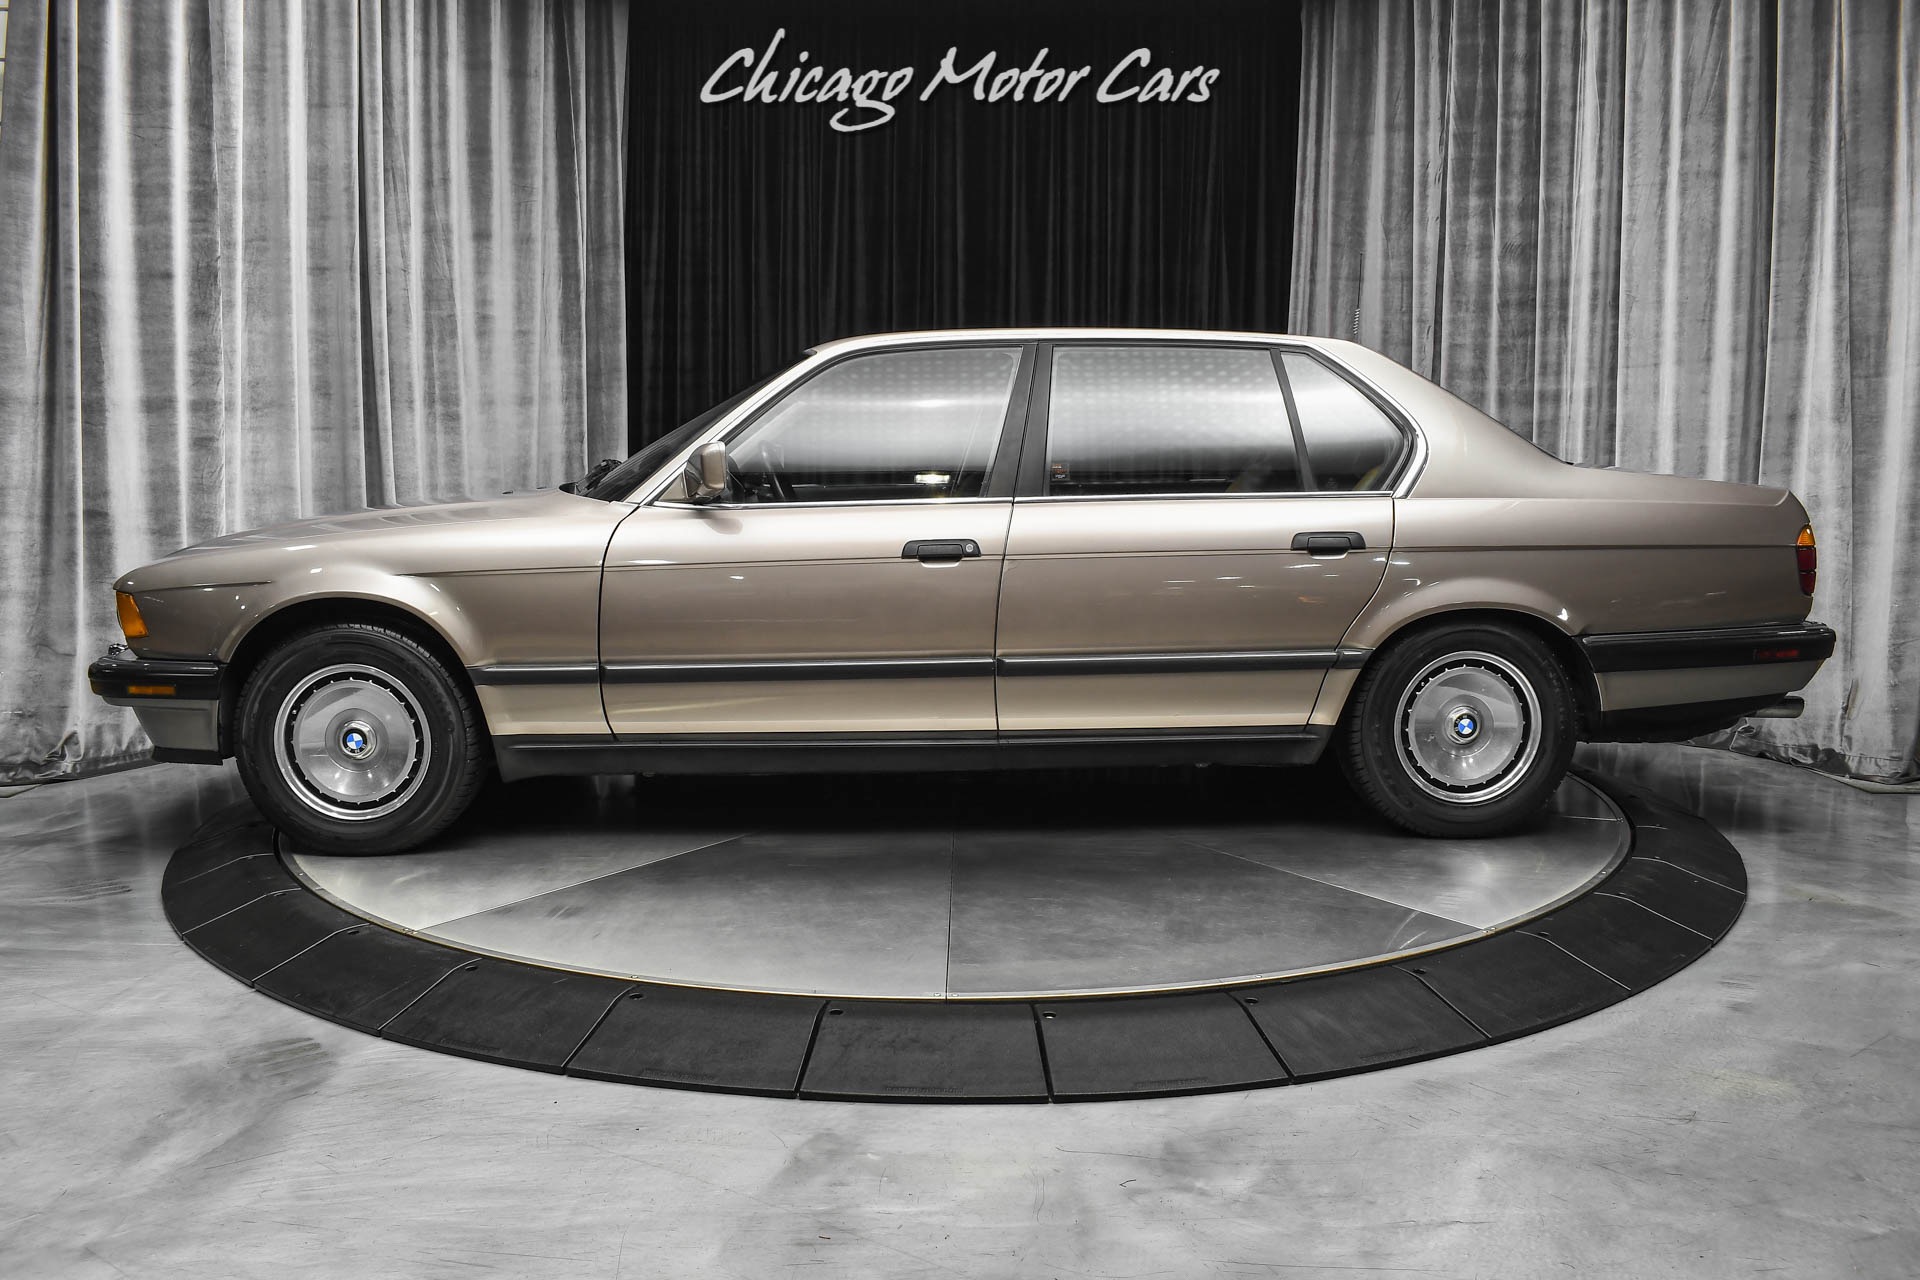 Used-1988-BMW-7-Series-750iL-V12-Long-Wheel-Base-Sedan-Beautifully-Well-Kept-Incredible-Example